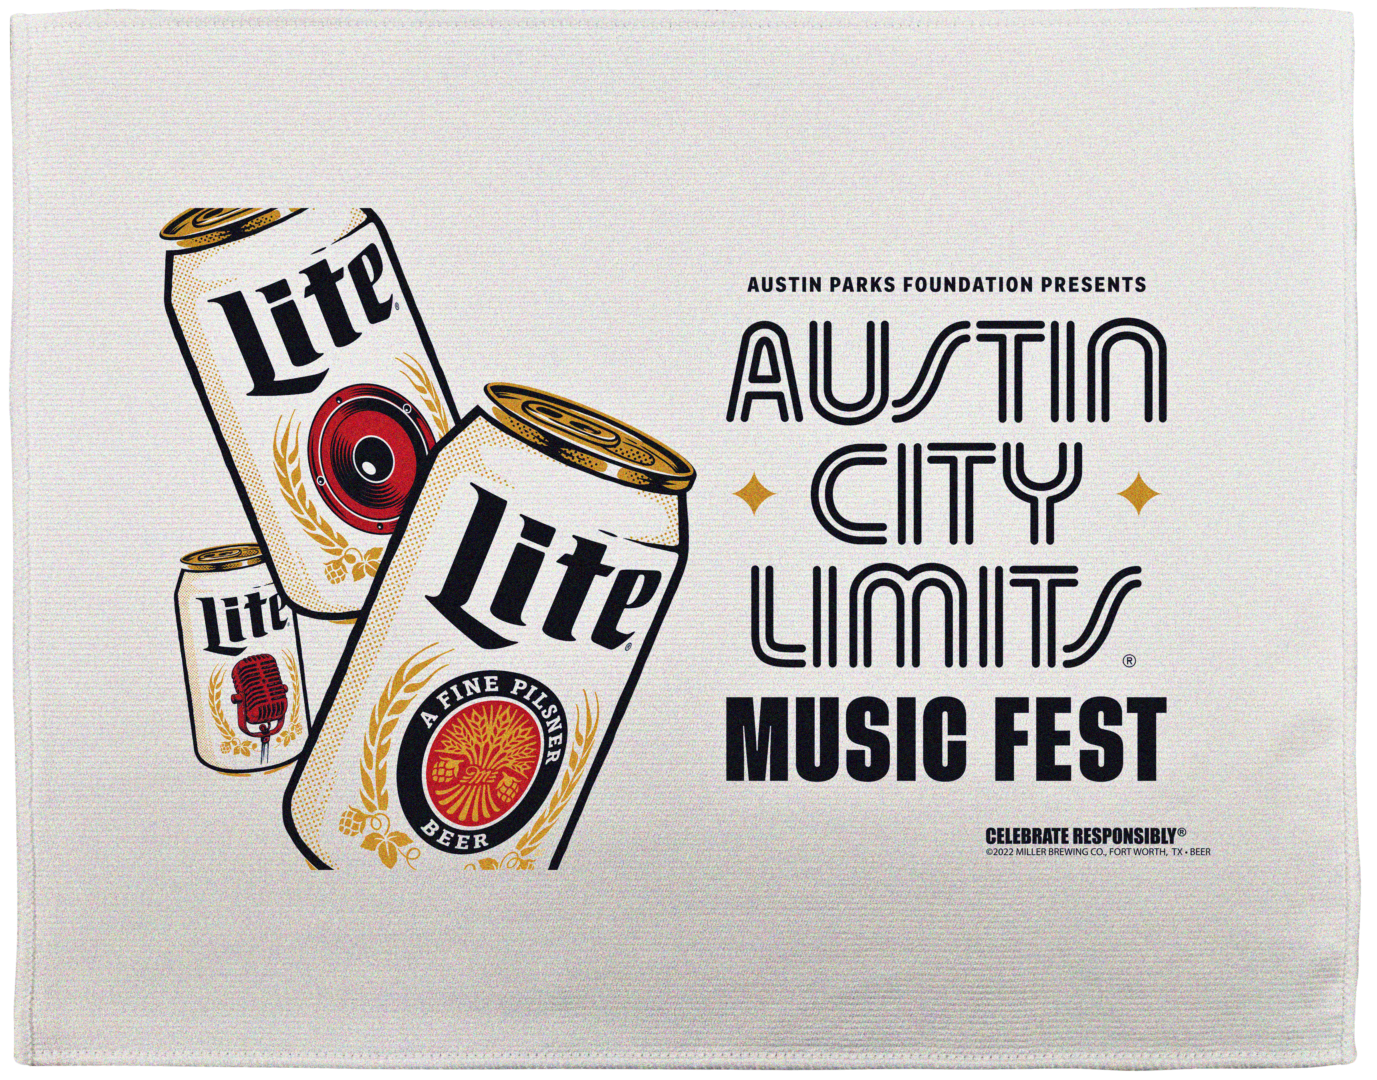 Austin city limits music fest text in white cloth